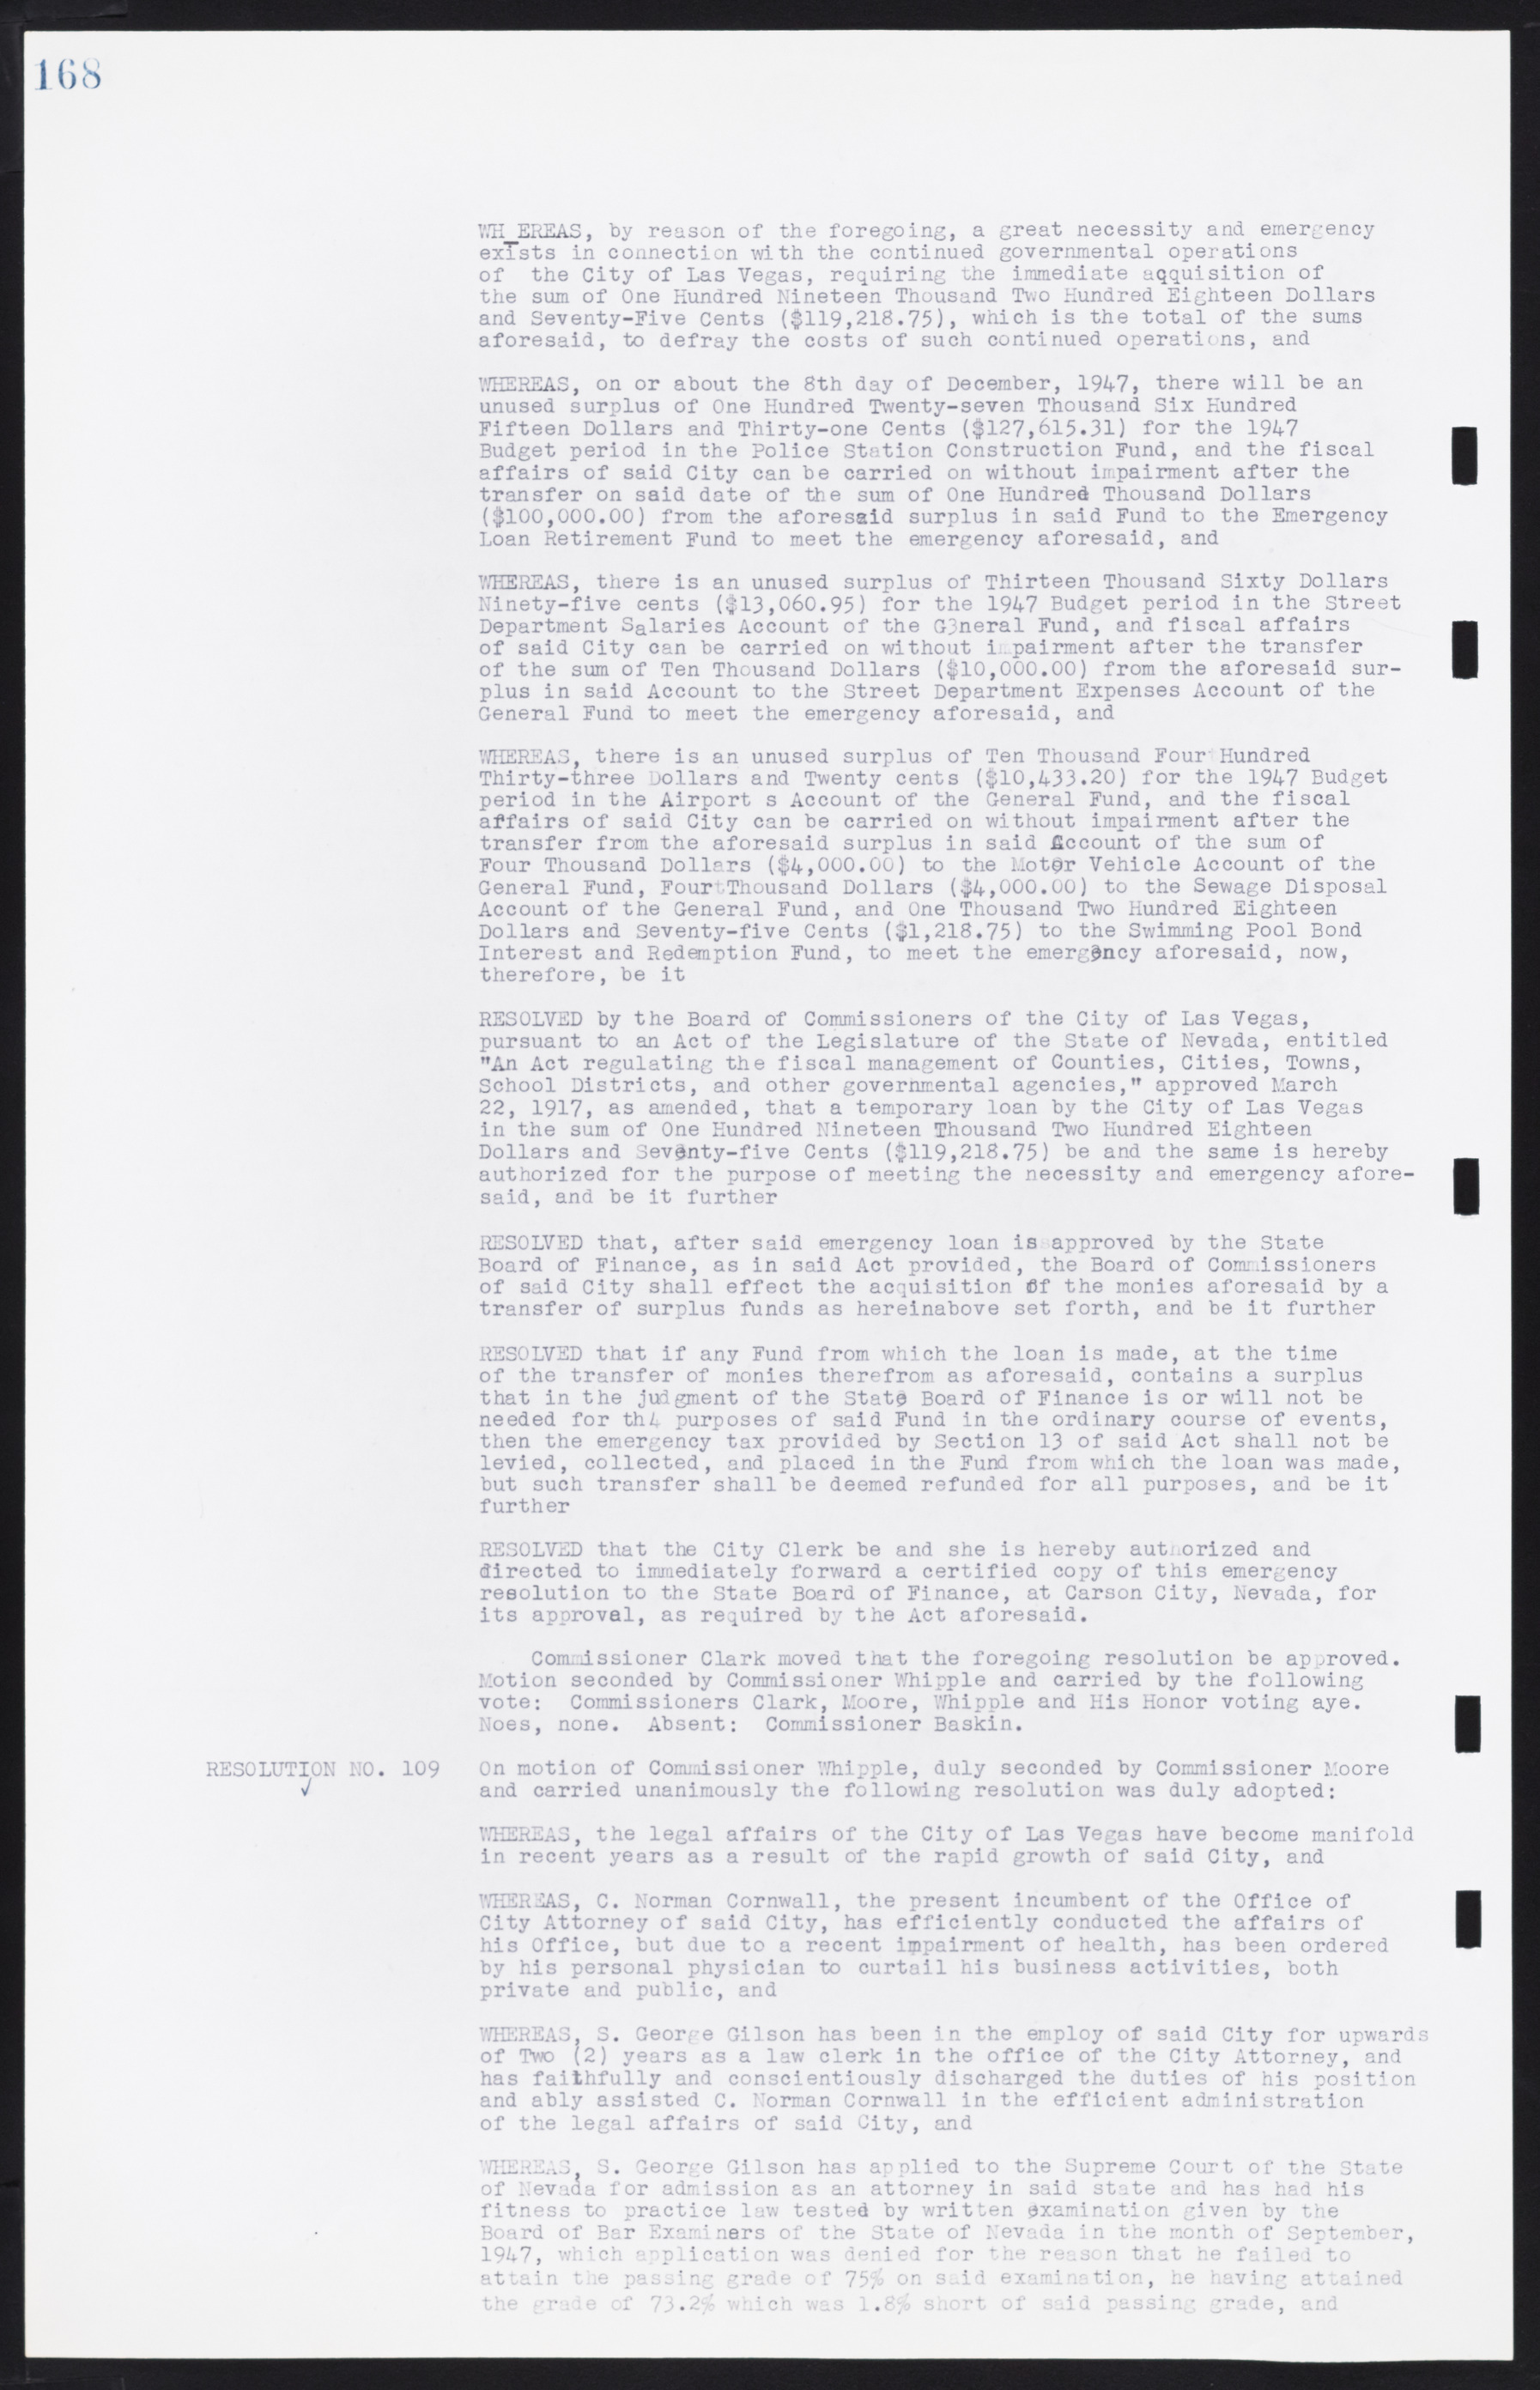 Las Vegas City Commission Minutes, January 7, 1947 to October 26, 1949, lvc000006-188